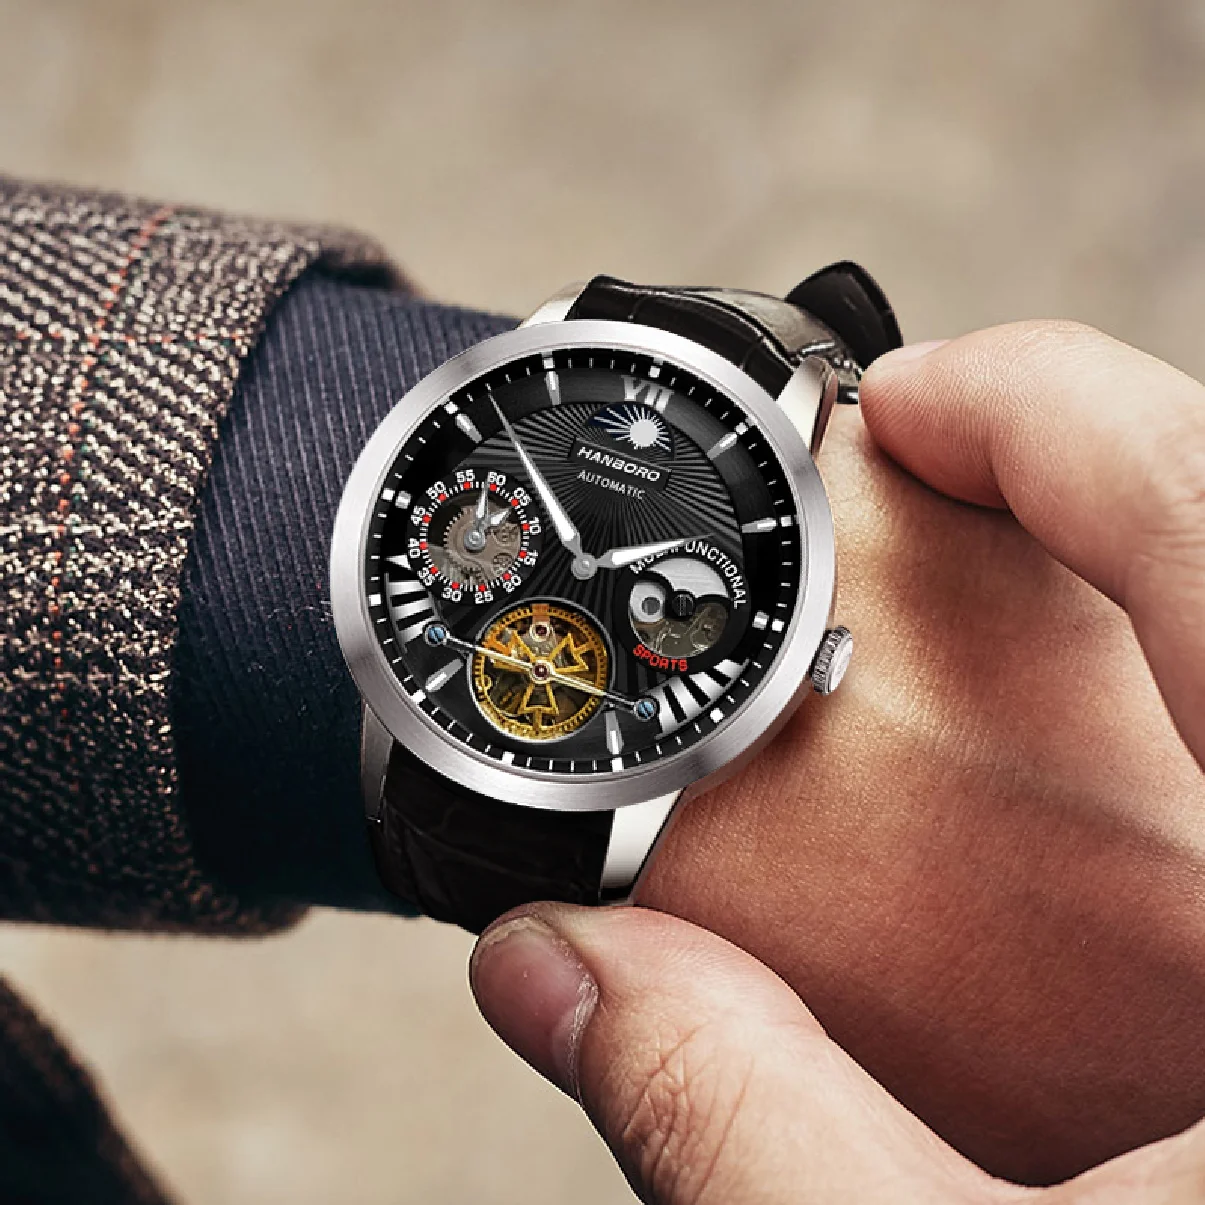 

HANBORO Genuine Men's Watch Fully Automatic Mechanical Watch Hollow Tourbillon Waterproof Luminous fashion Brand business watch